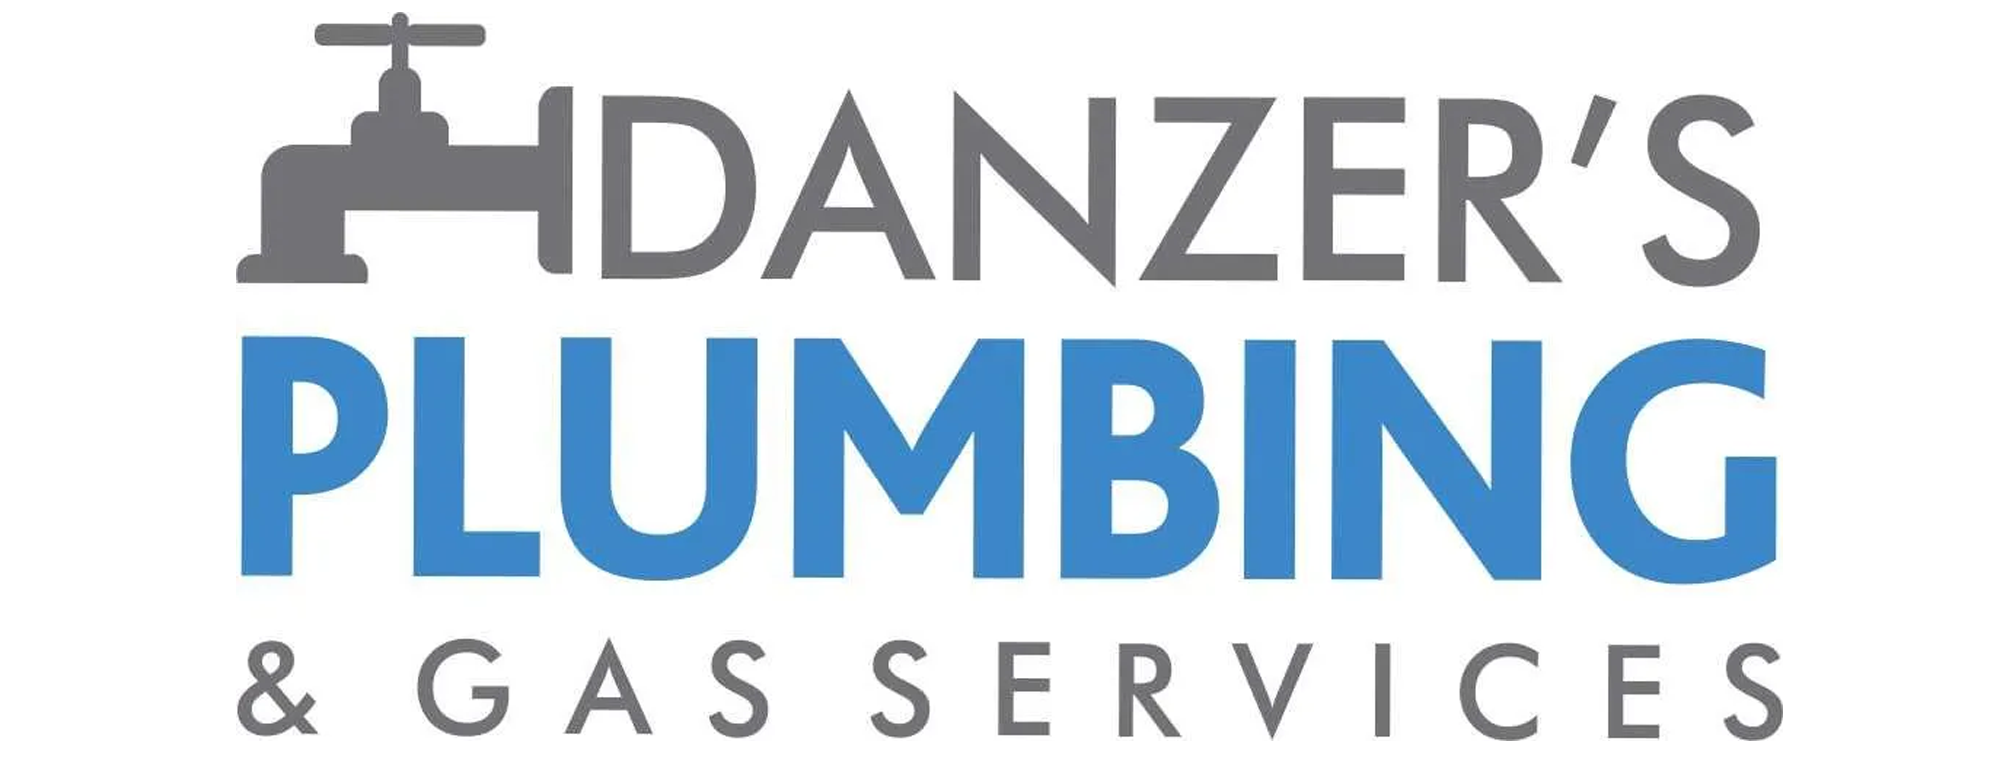 Danzer's Plumbing